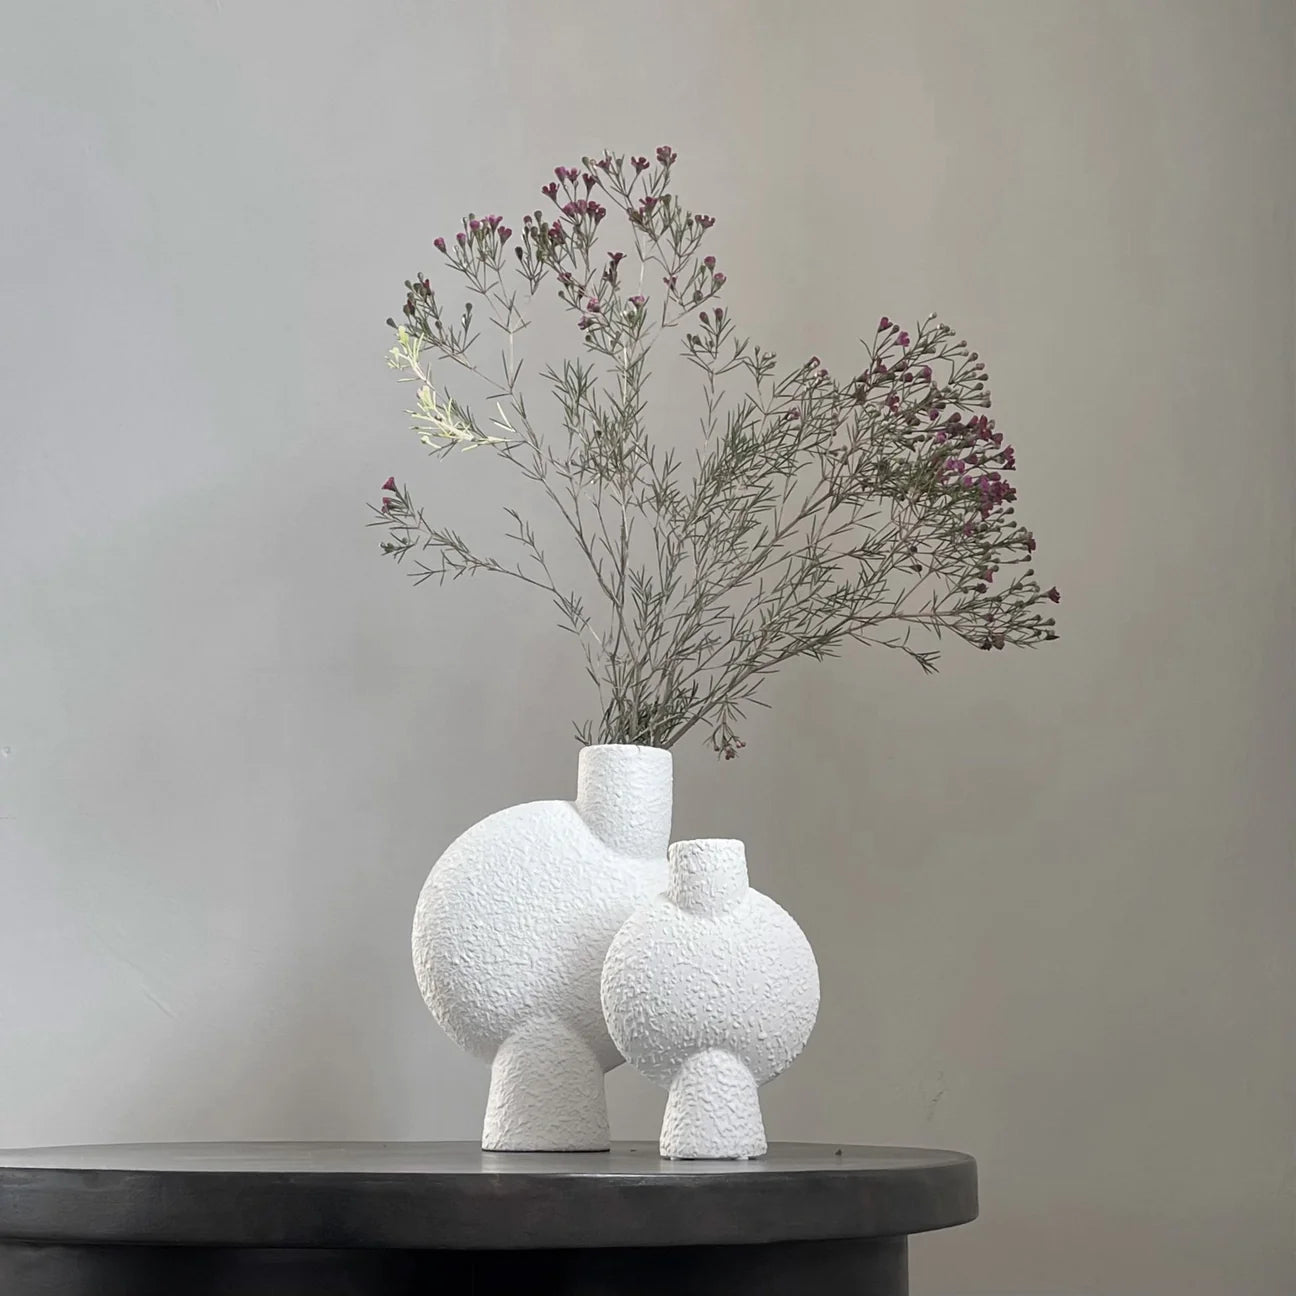 Sphere Buble Vase Mini White